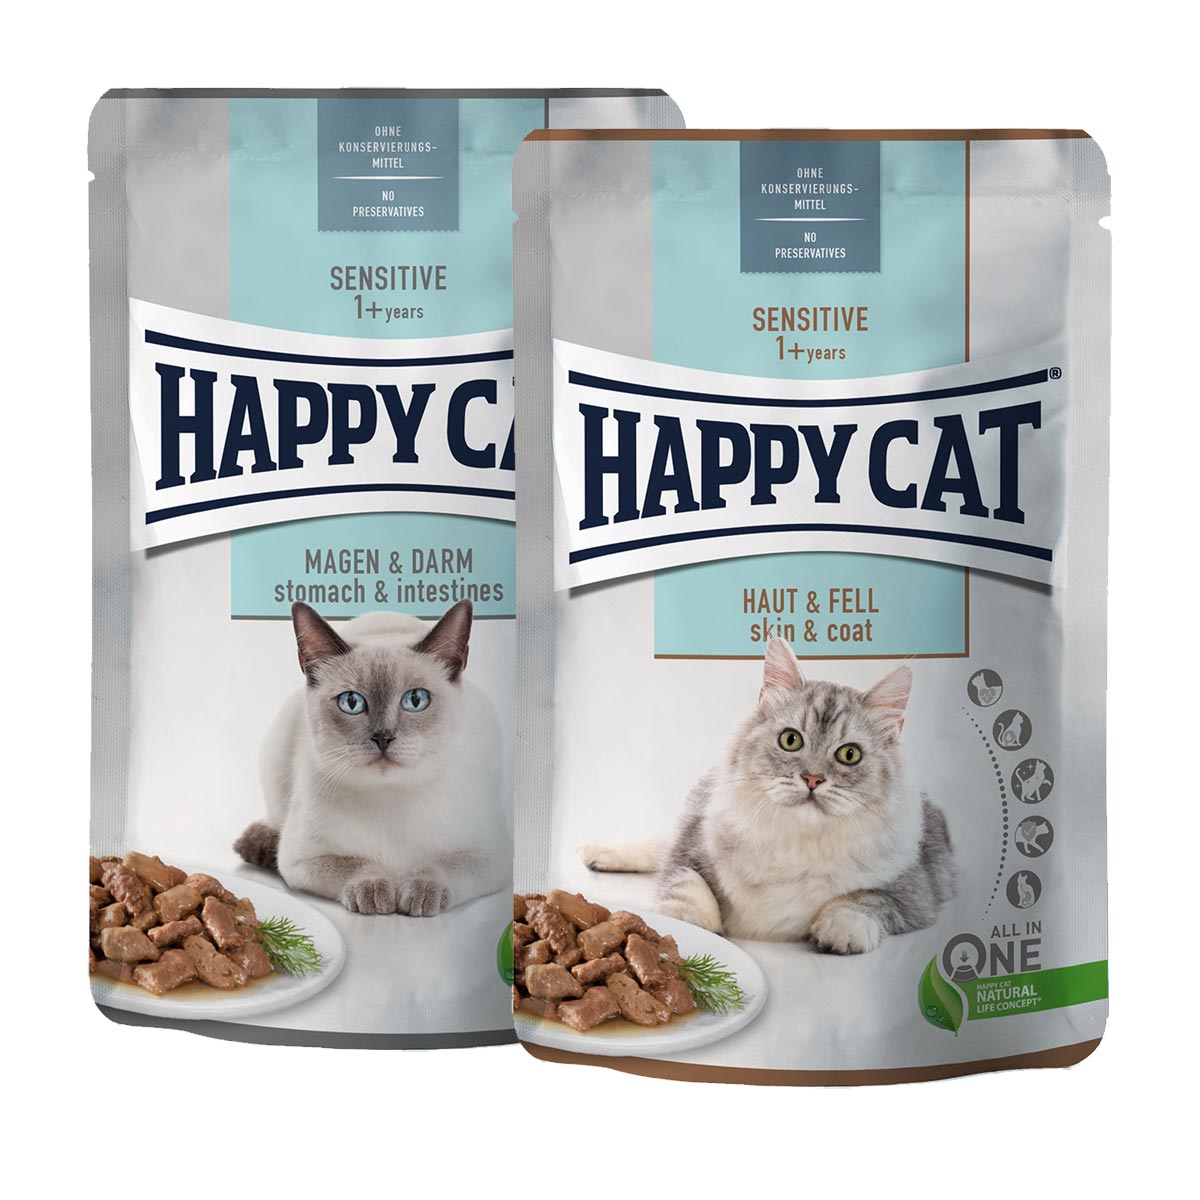 Happy Cat Mixpaket Sensitive Meat 24x85g – mit 20% Rabatt günstig kaufen